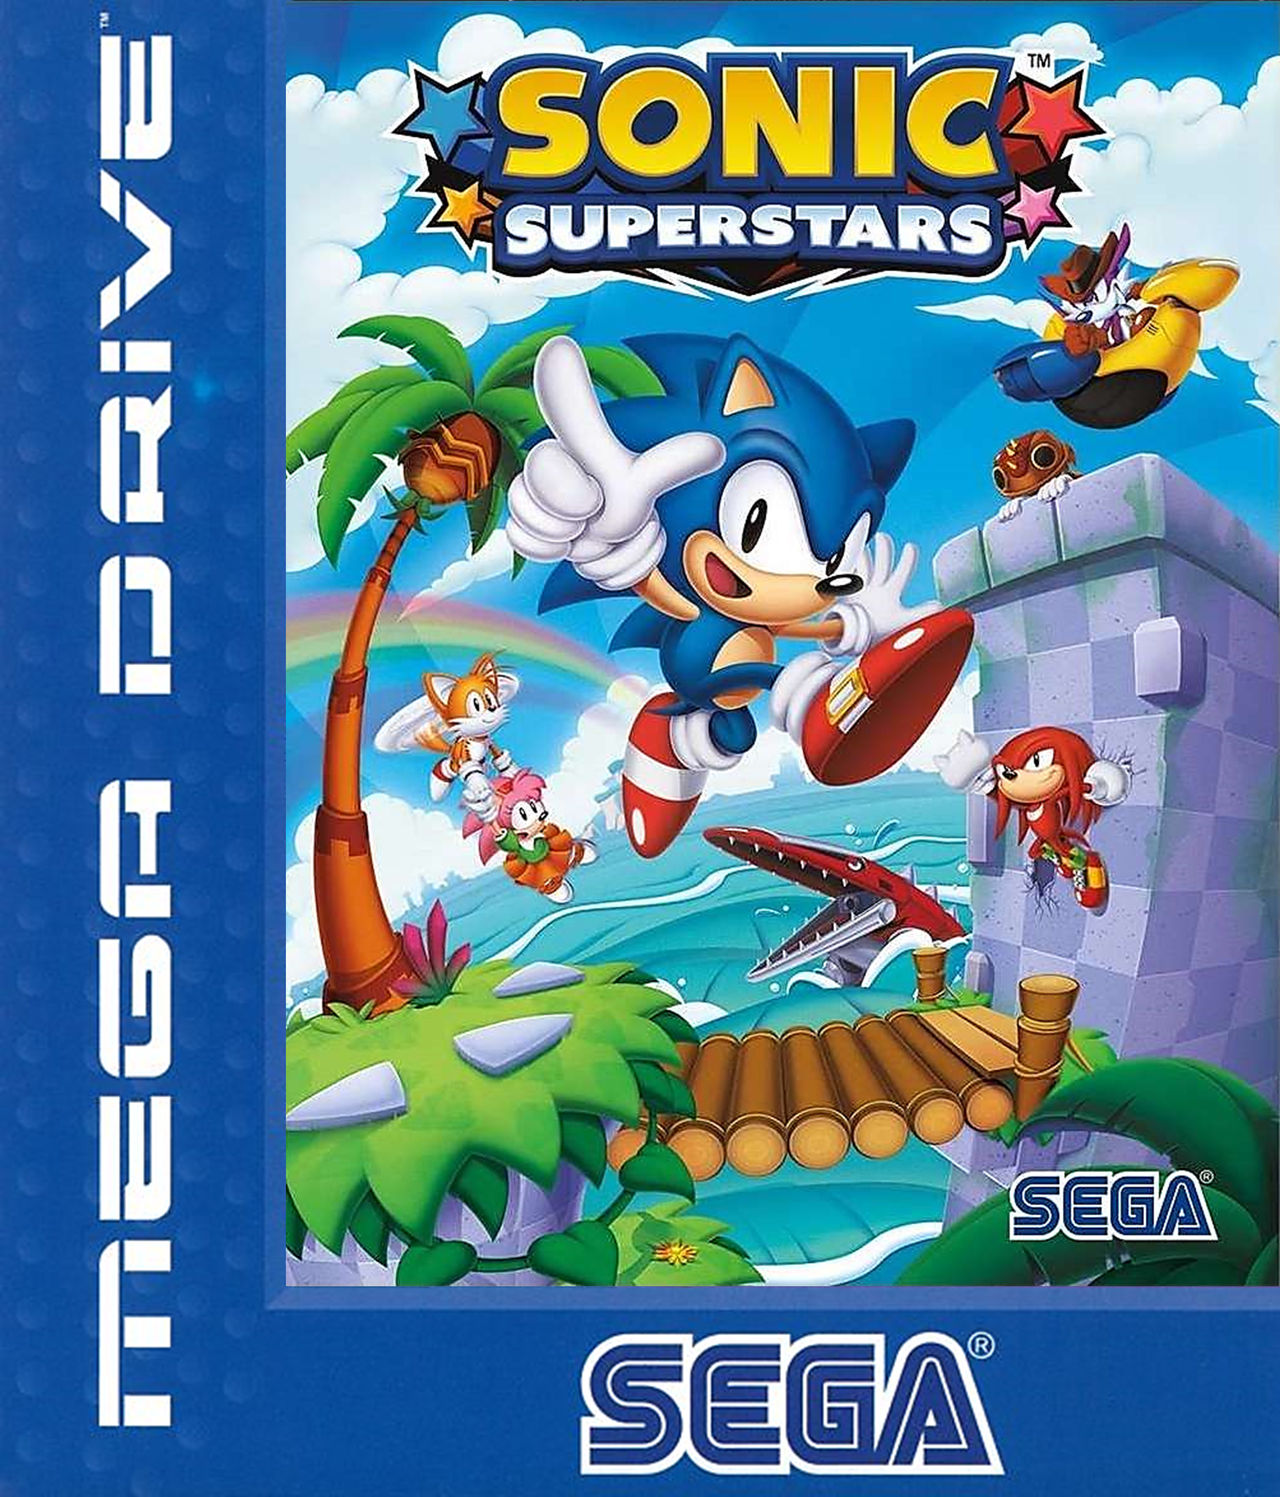 Sonic Superstars SEGA Mega Drive PAL Cover by gikesmanners1995 on